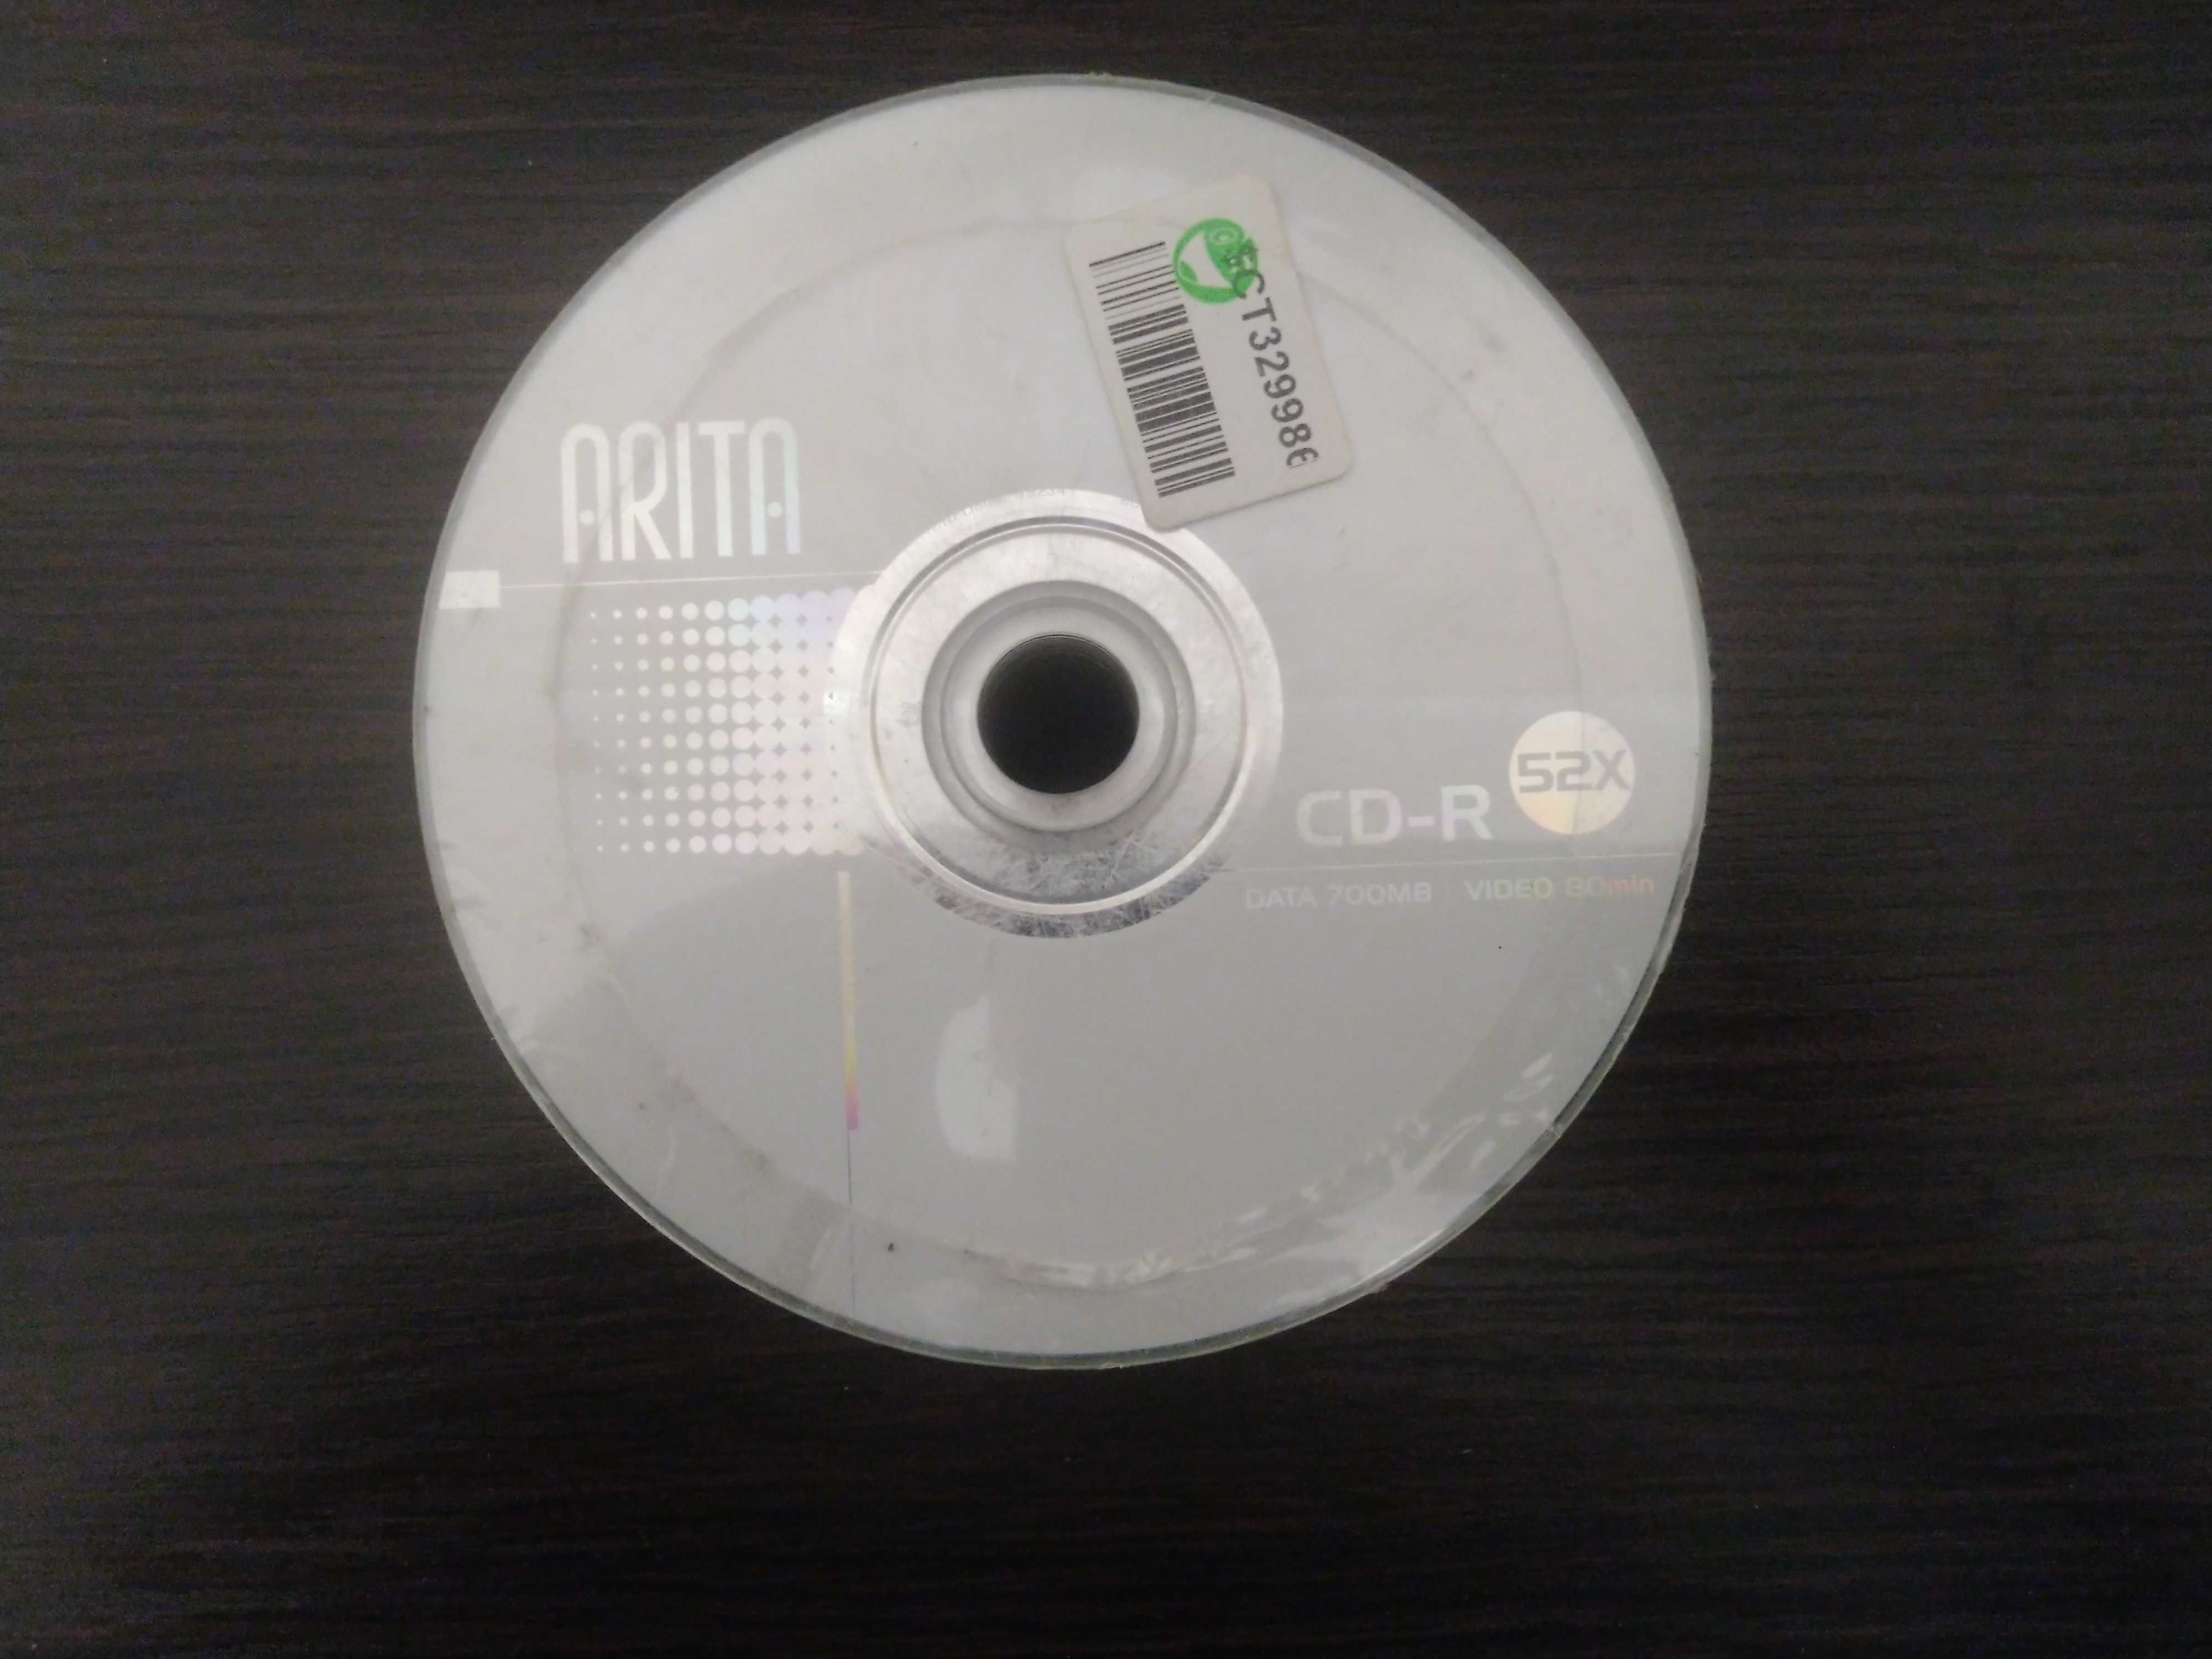 CD-R диски Arita 700mb, 52x speed, 80min. Cakebox 25шт.